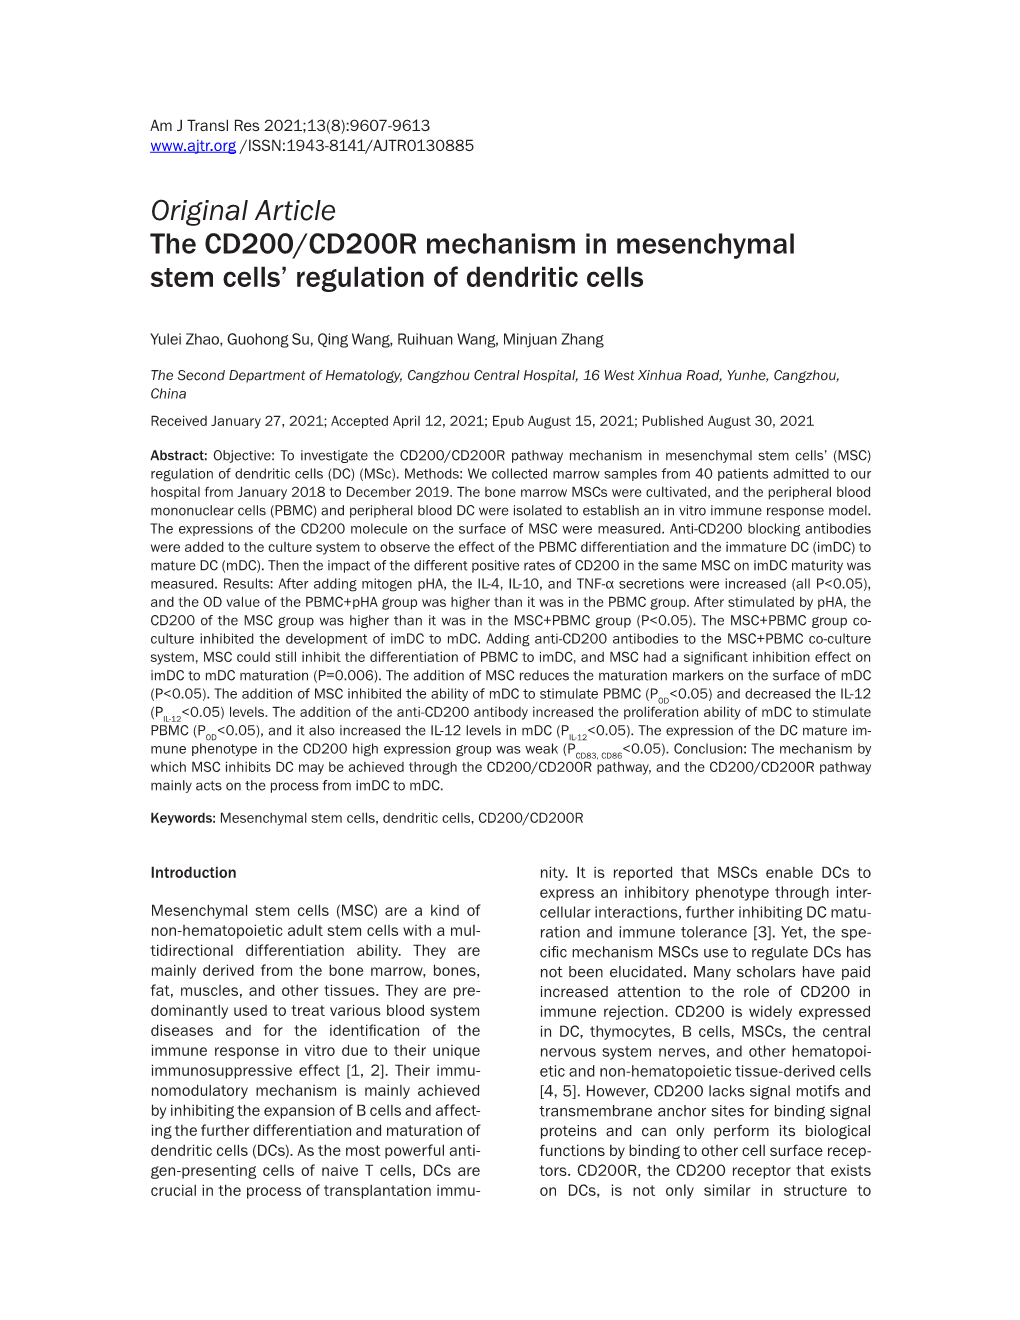 Original Article the CD200/CD200R Mechanism in Mesenchymal Stem Cells’ Regulation of Dendritic Cells